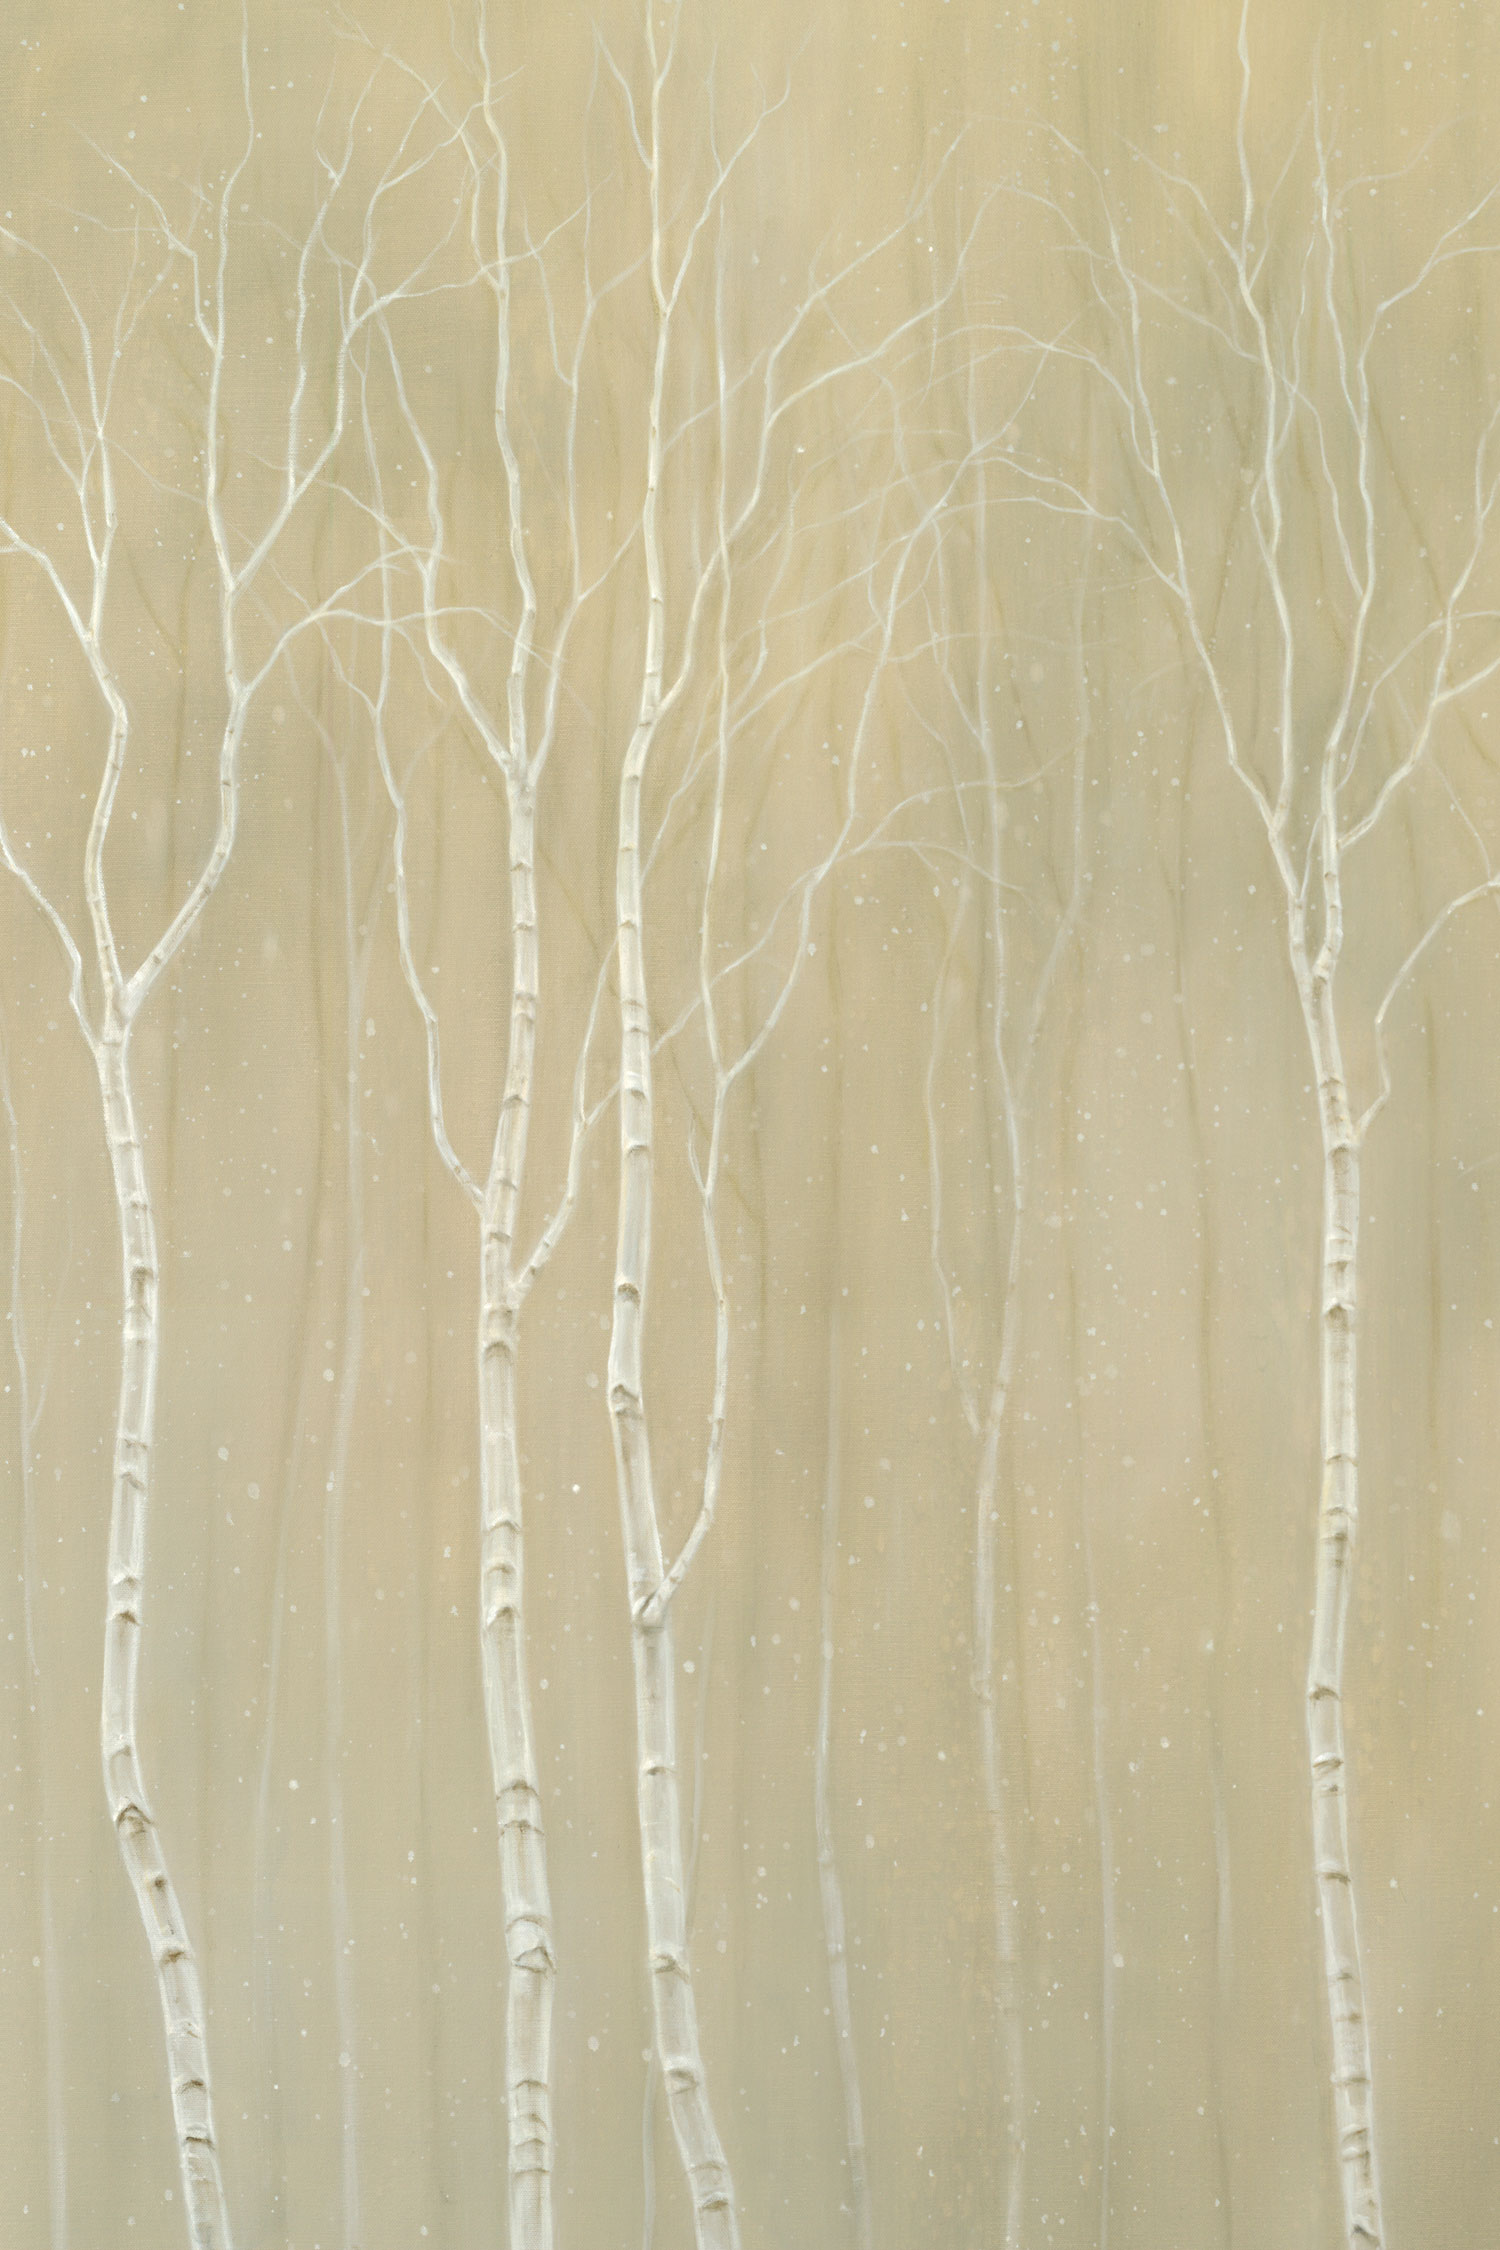 Snowy Birch Grove (detail)